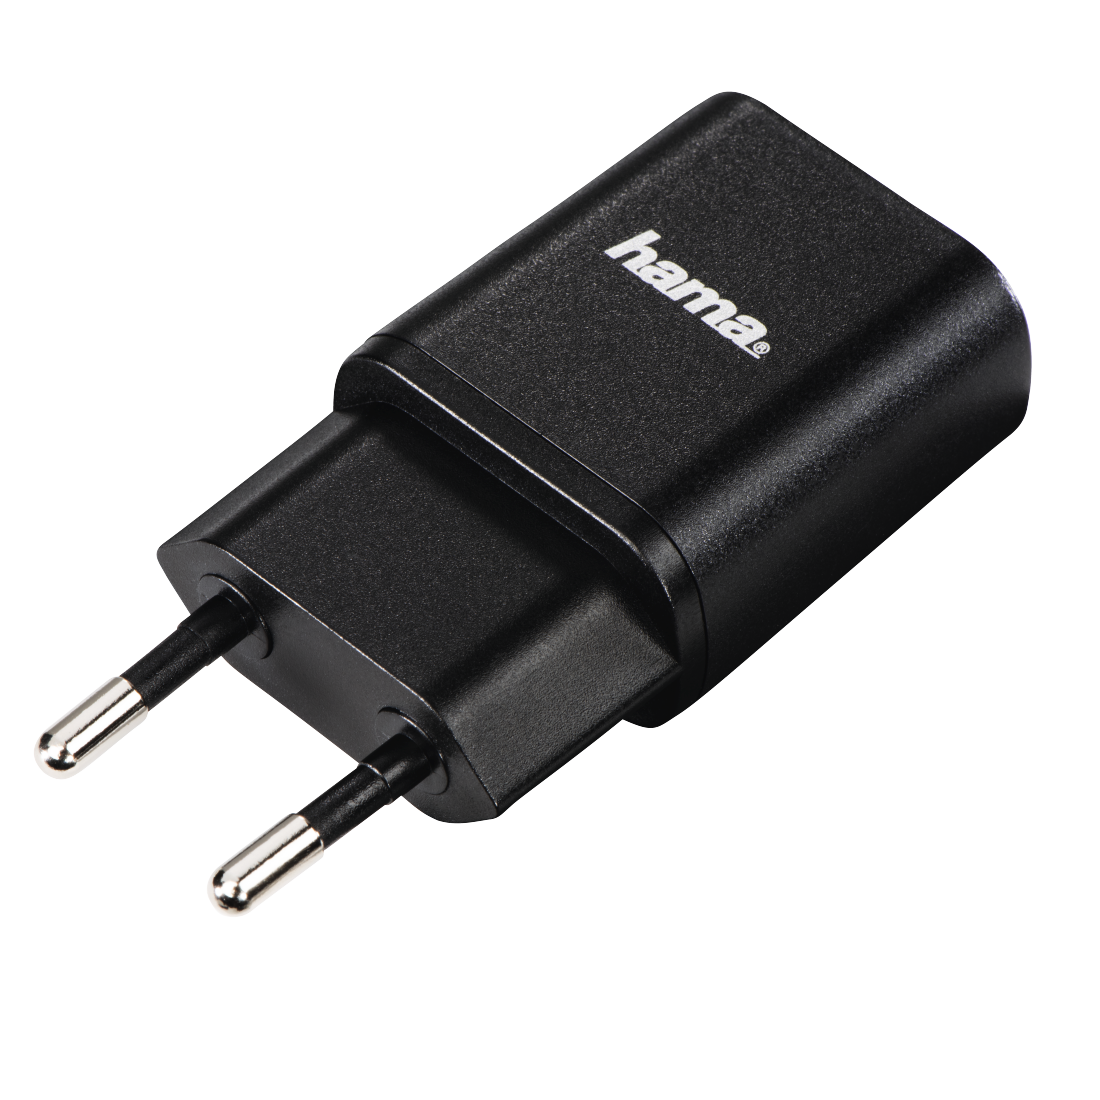 00012151 Hama USB car charger 5V/1A | hama.com